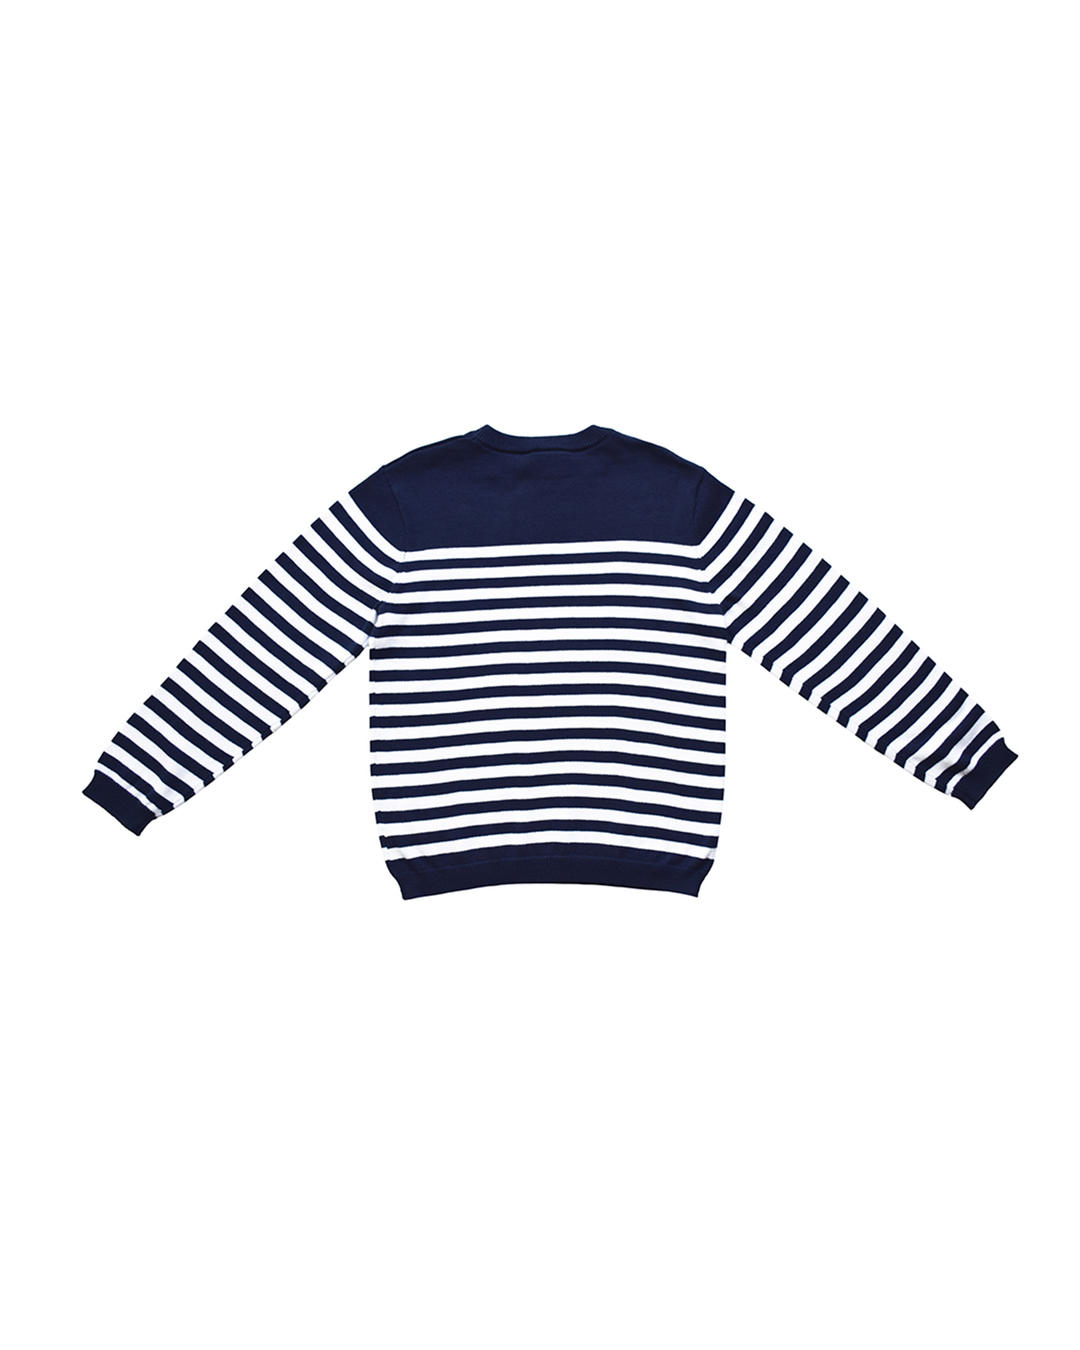 Suéter azul marino con rayas blancas